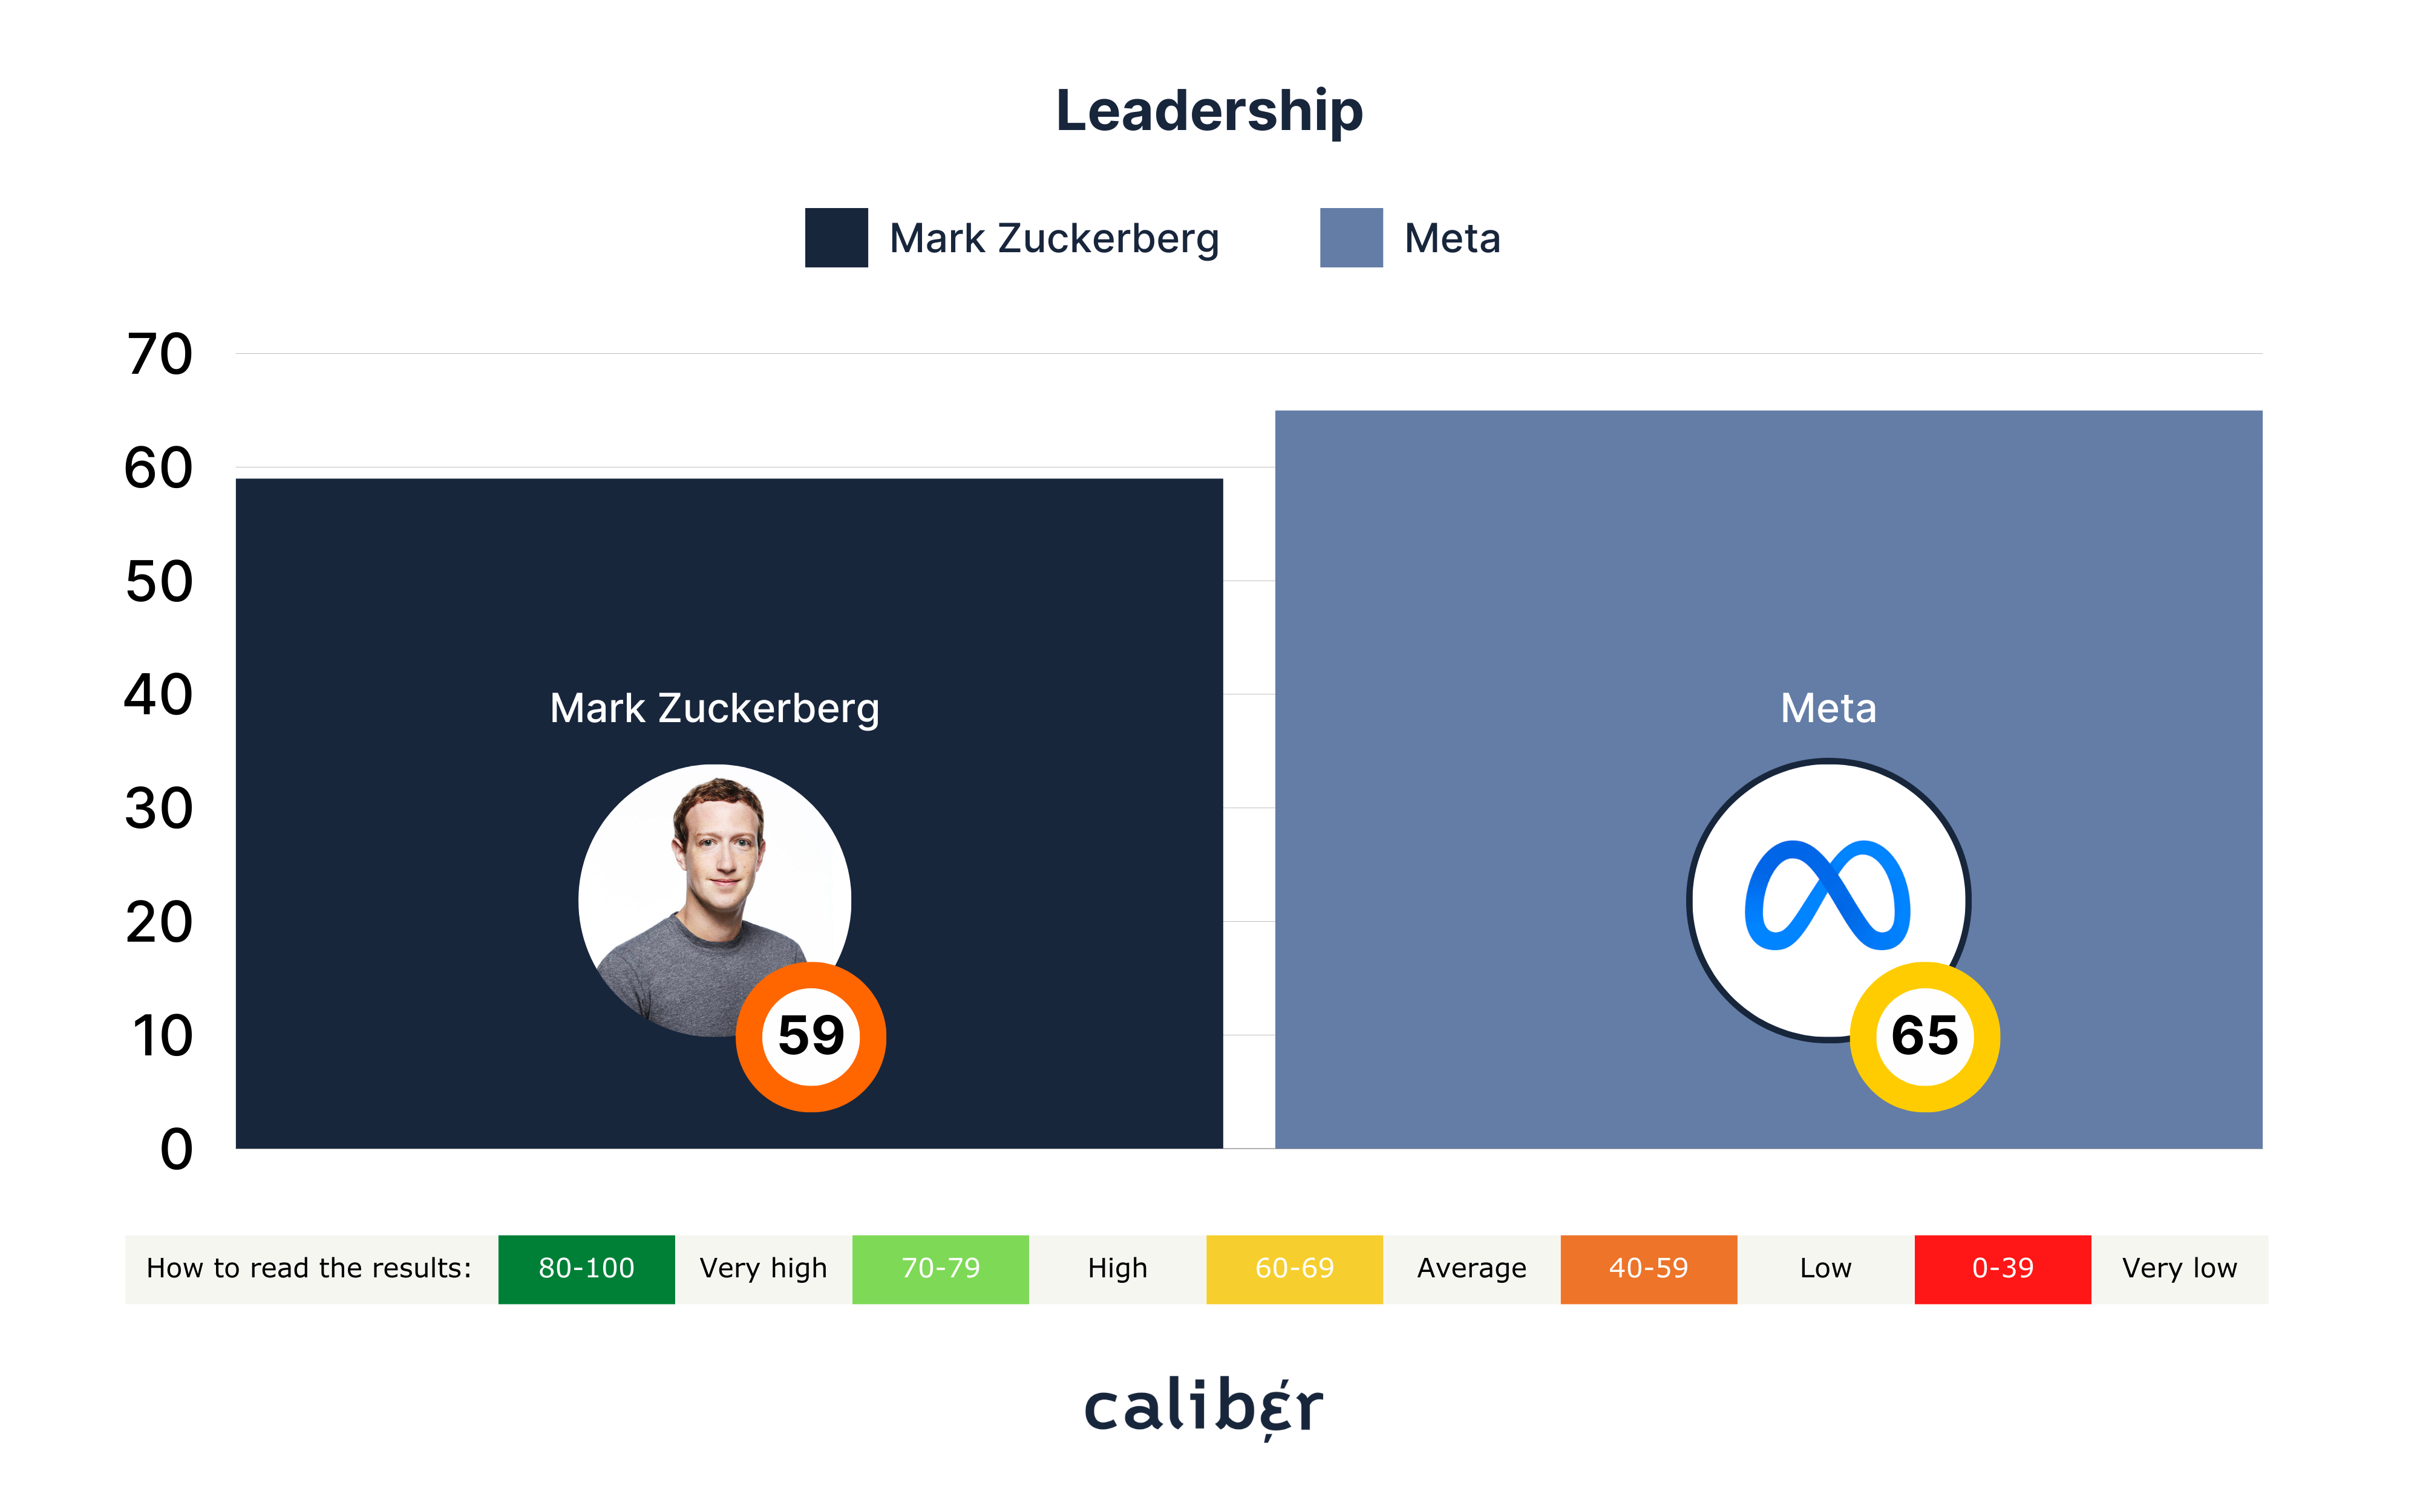 Mark Zuckerberg Leadership Score